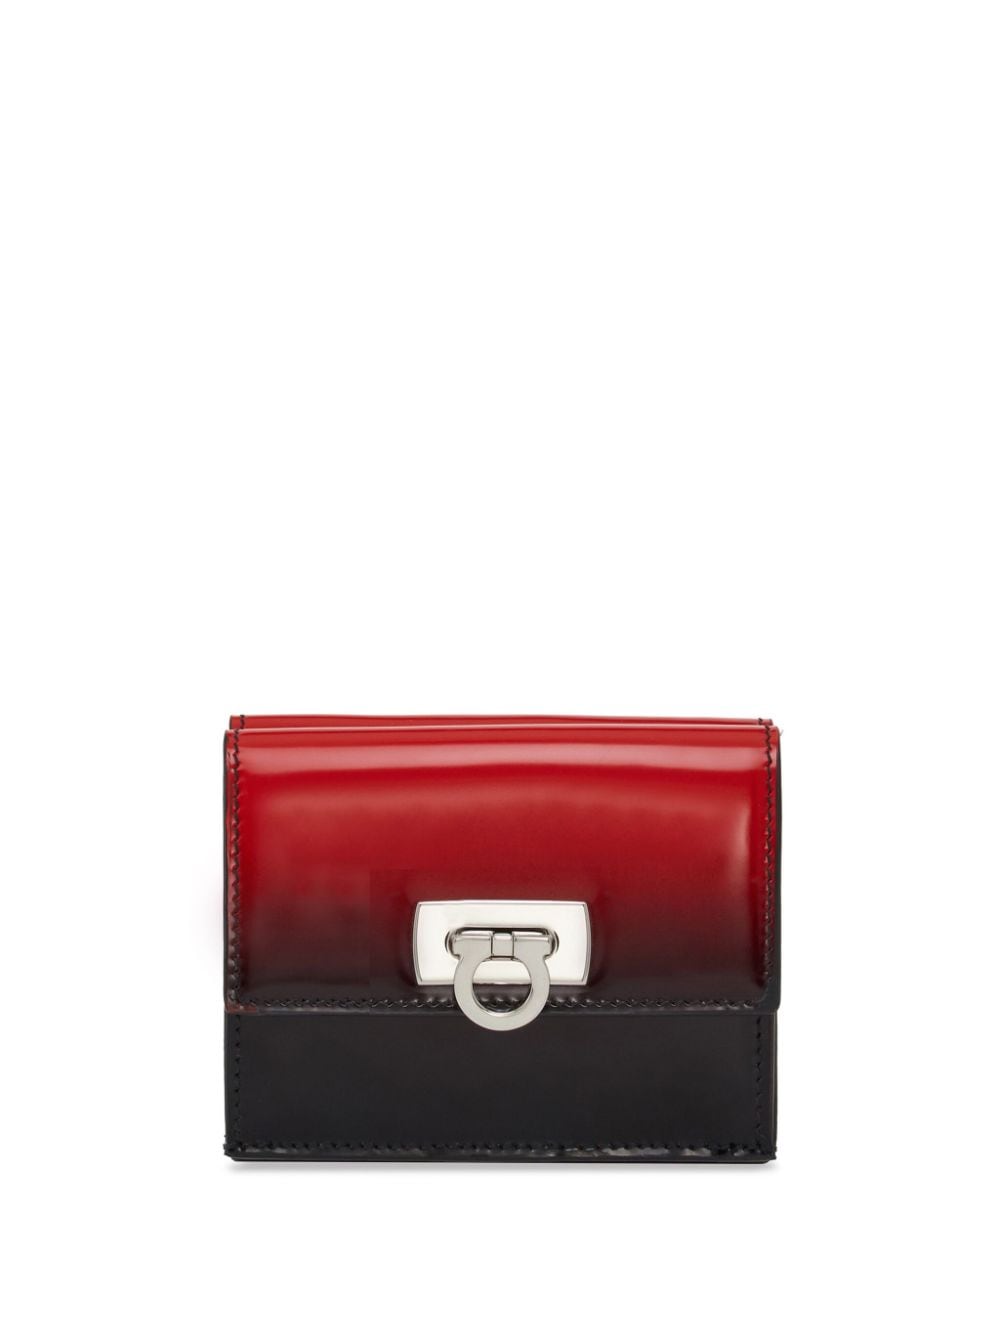 Ferragamo gradient-effect leather purse - Red